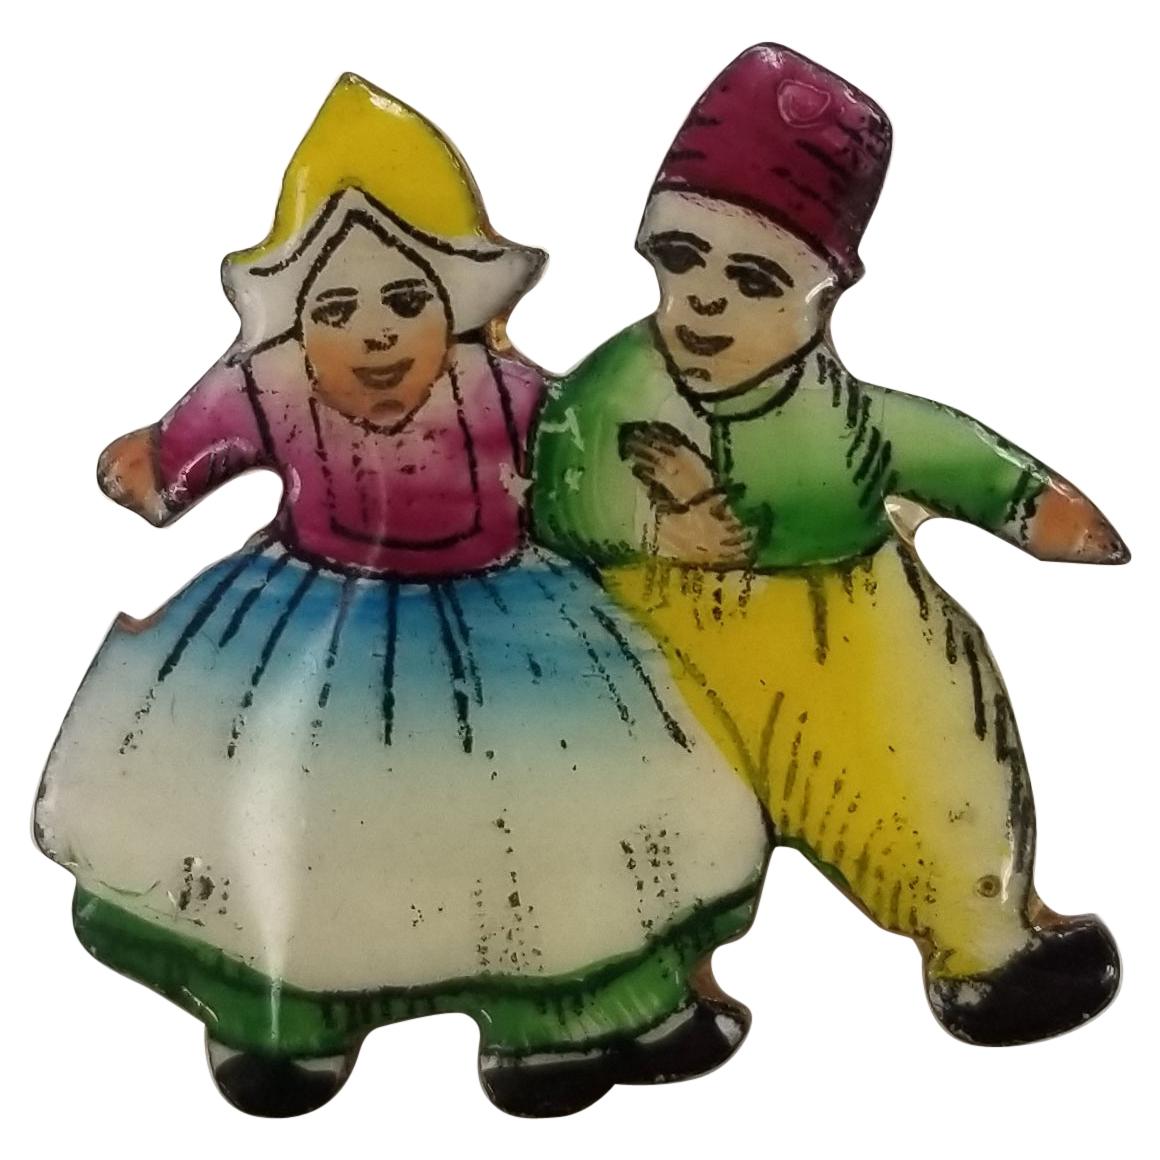 Man et femme dansant dansant dansant dans une broche en émail "Czecho"